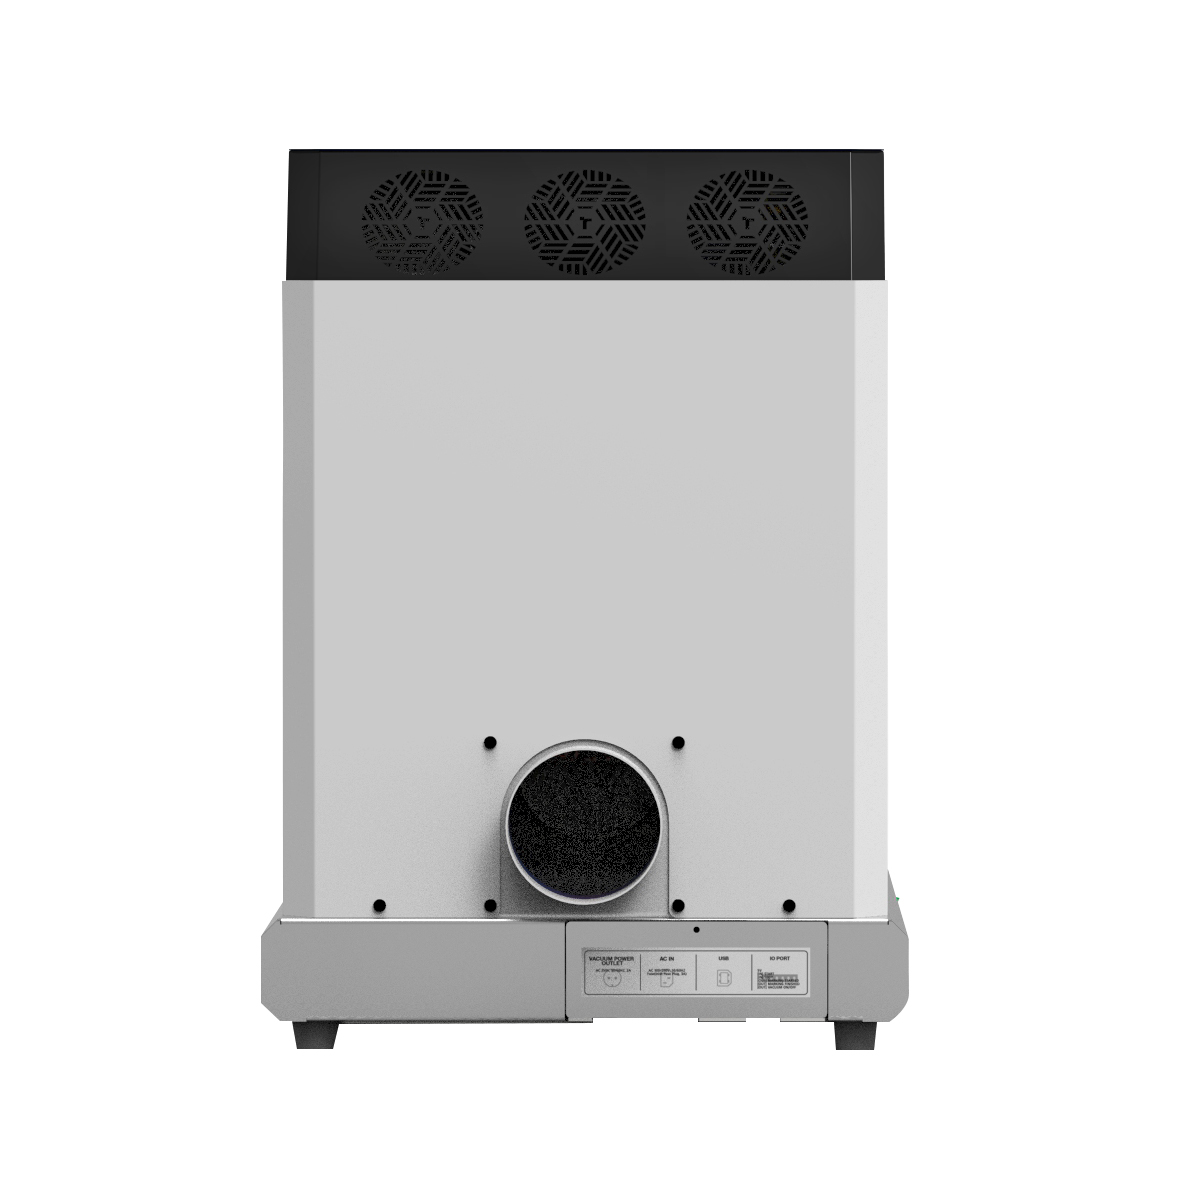 Lasermarkering machine Magic-L3 60W met geïntegreerde camera en autofocus